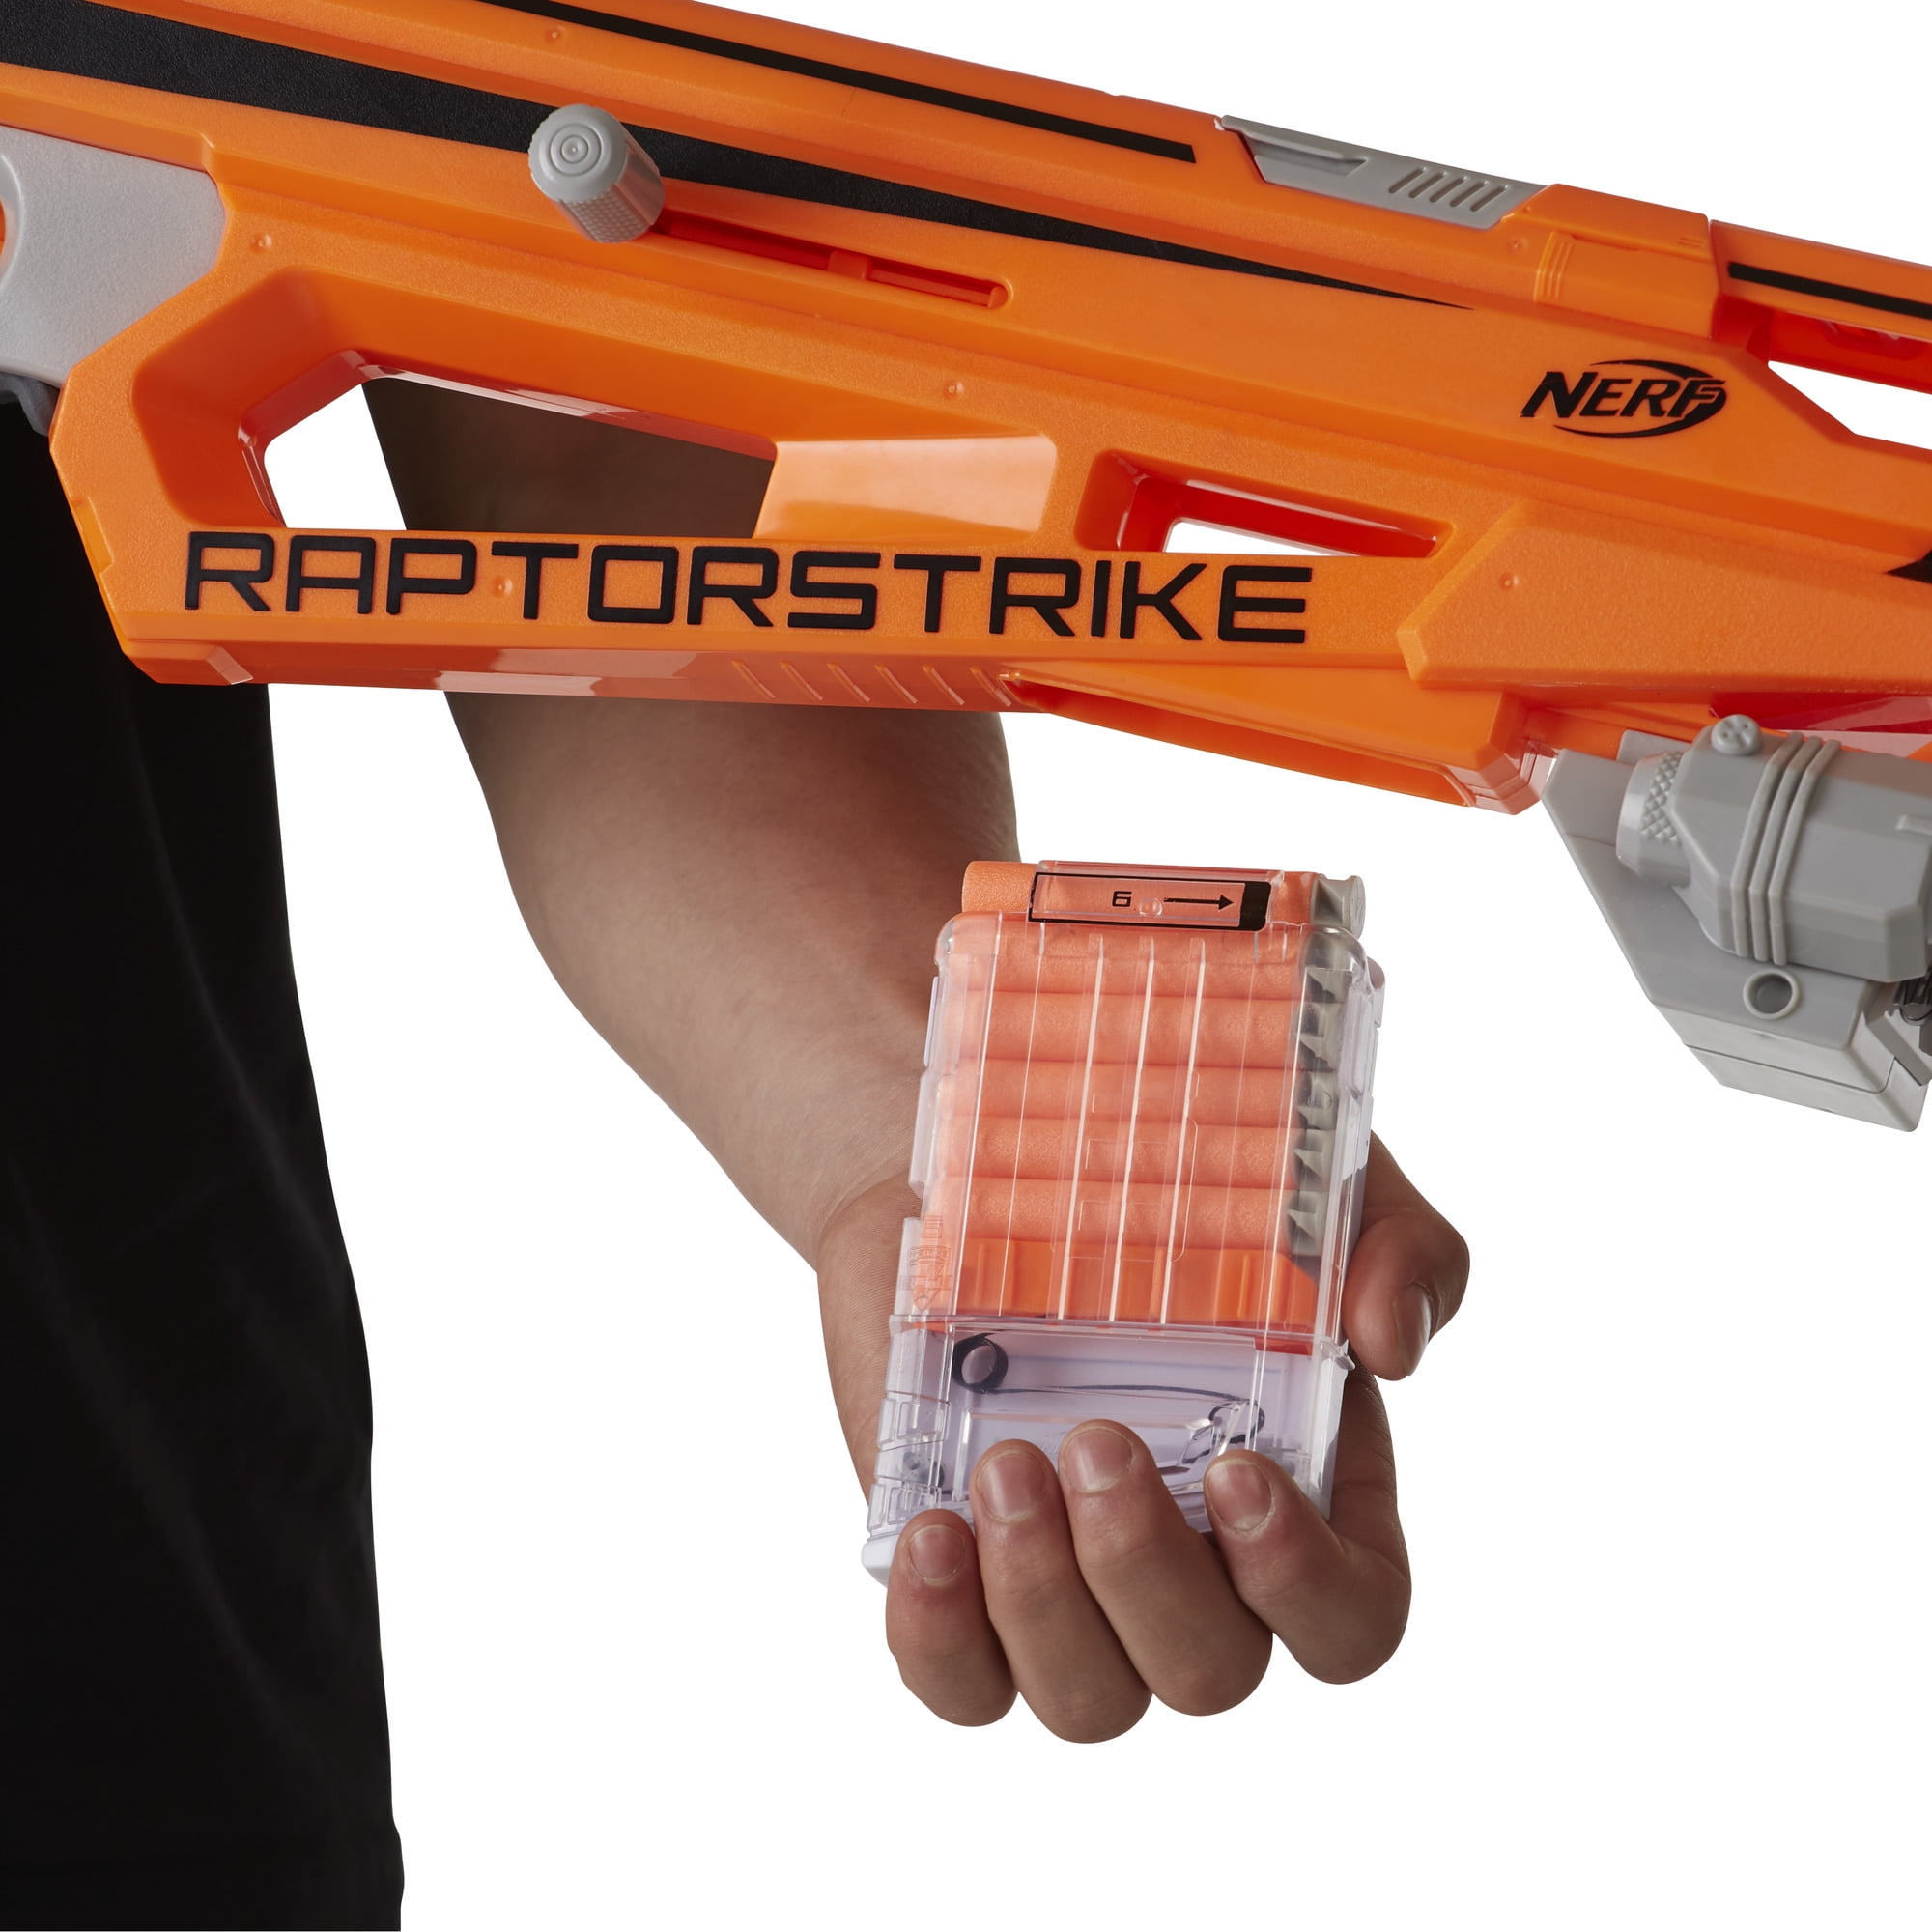 Lança Dardo Nerf Accustrike Raptorstrike - Hasbro em Promoção na